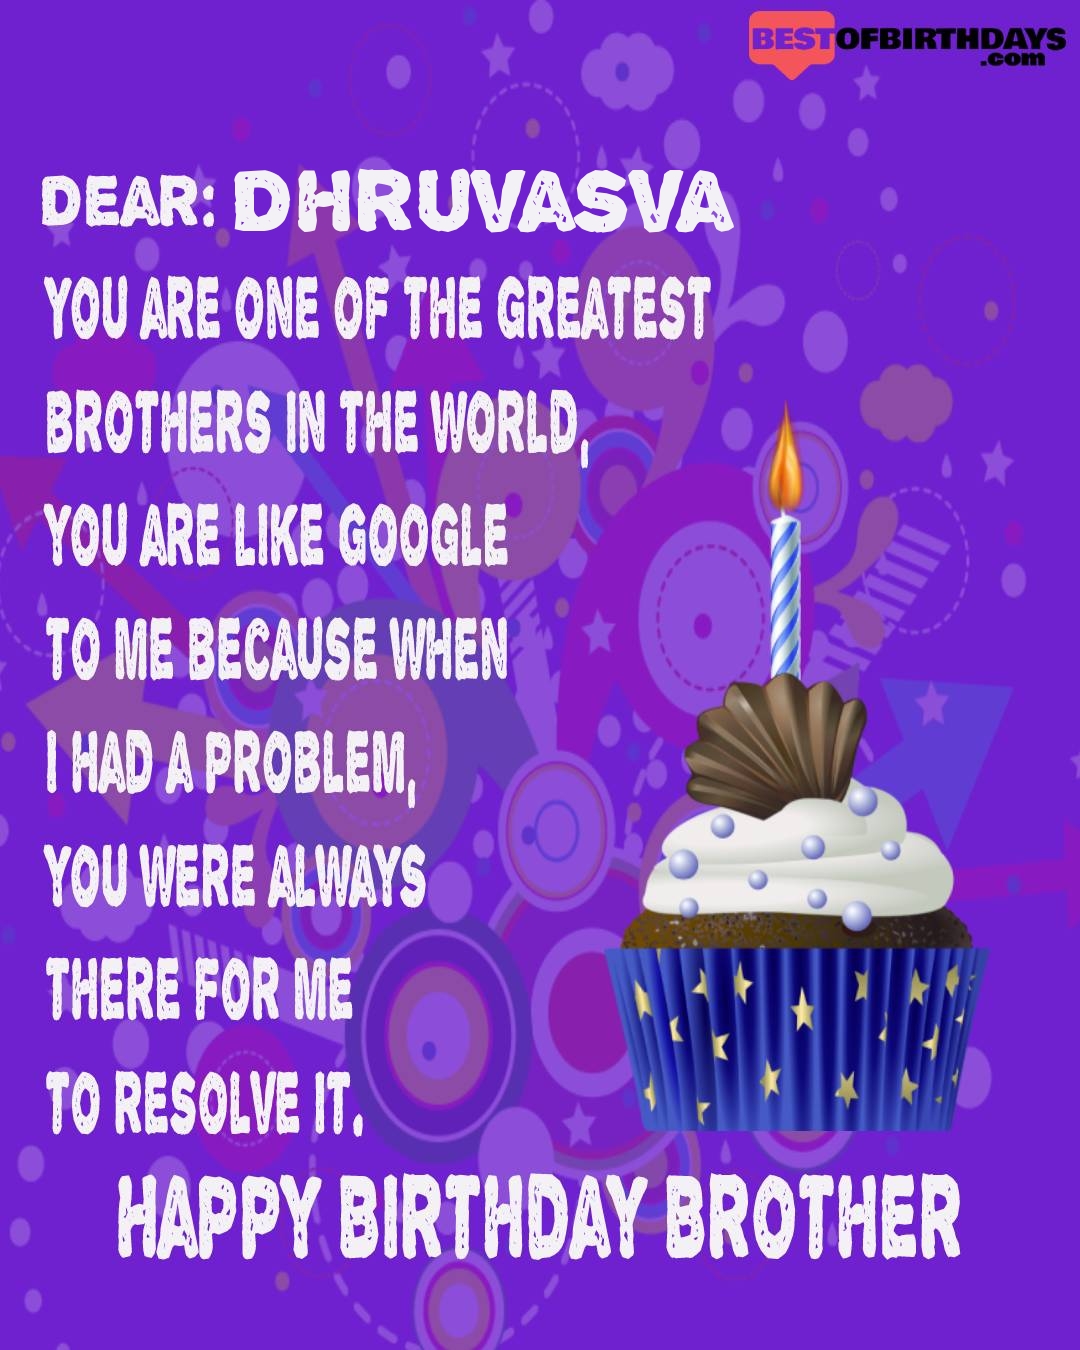 Happy birthday dhruvasva bhai brother bro